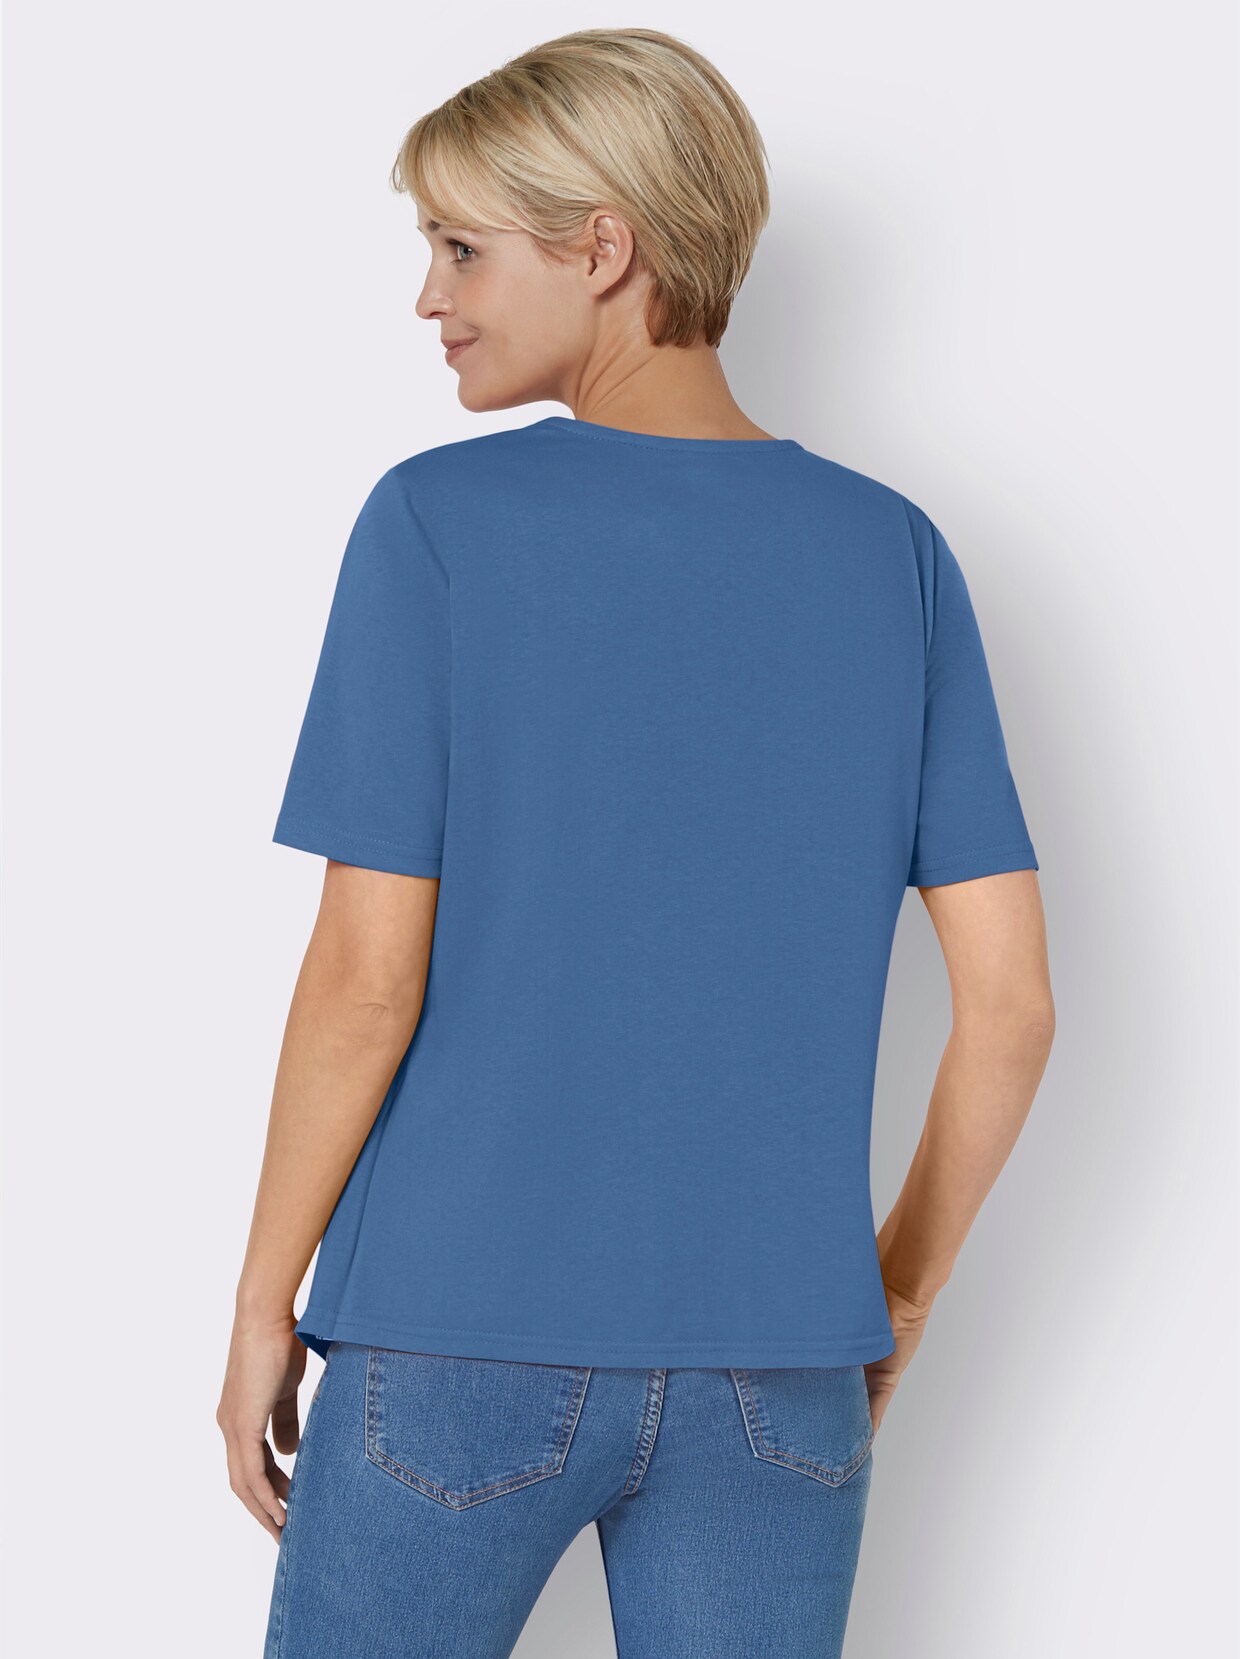 2-in-1-shirt - middenblauw